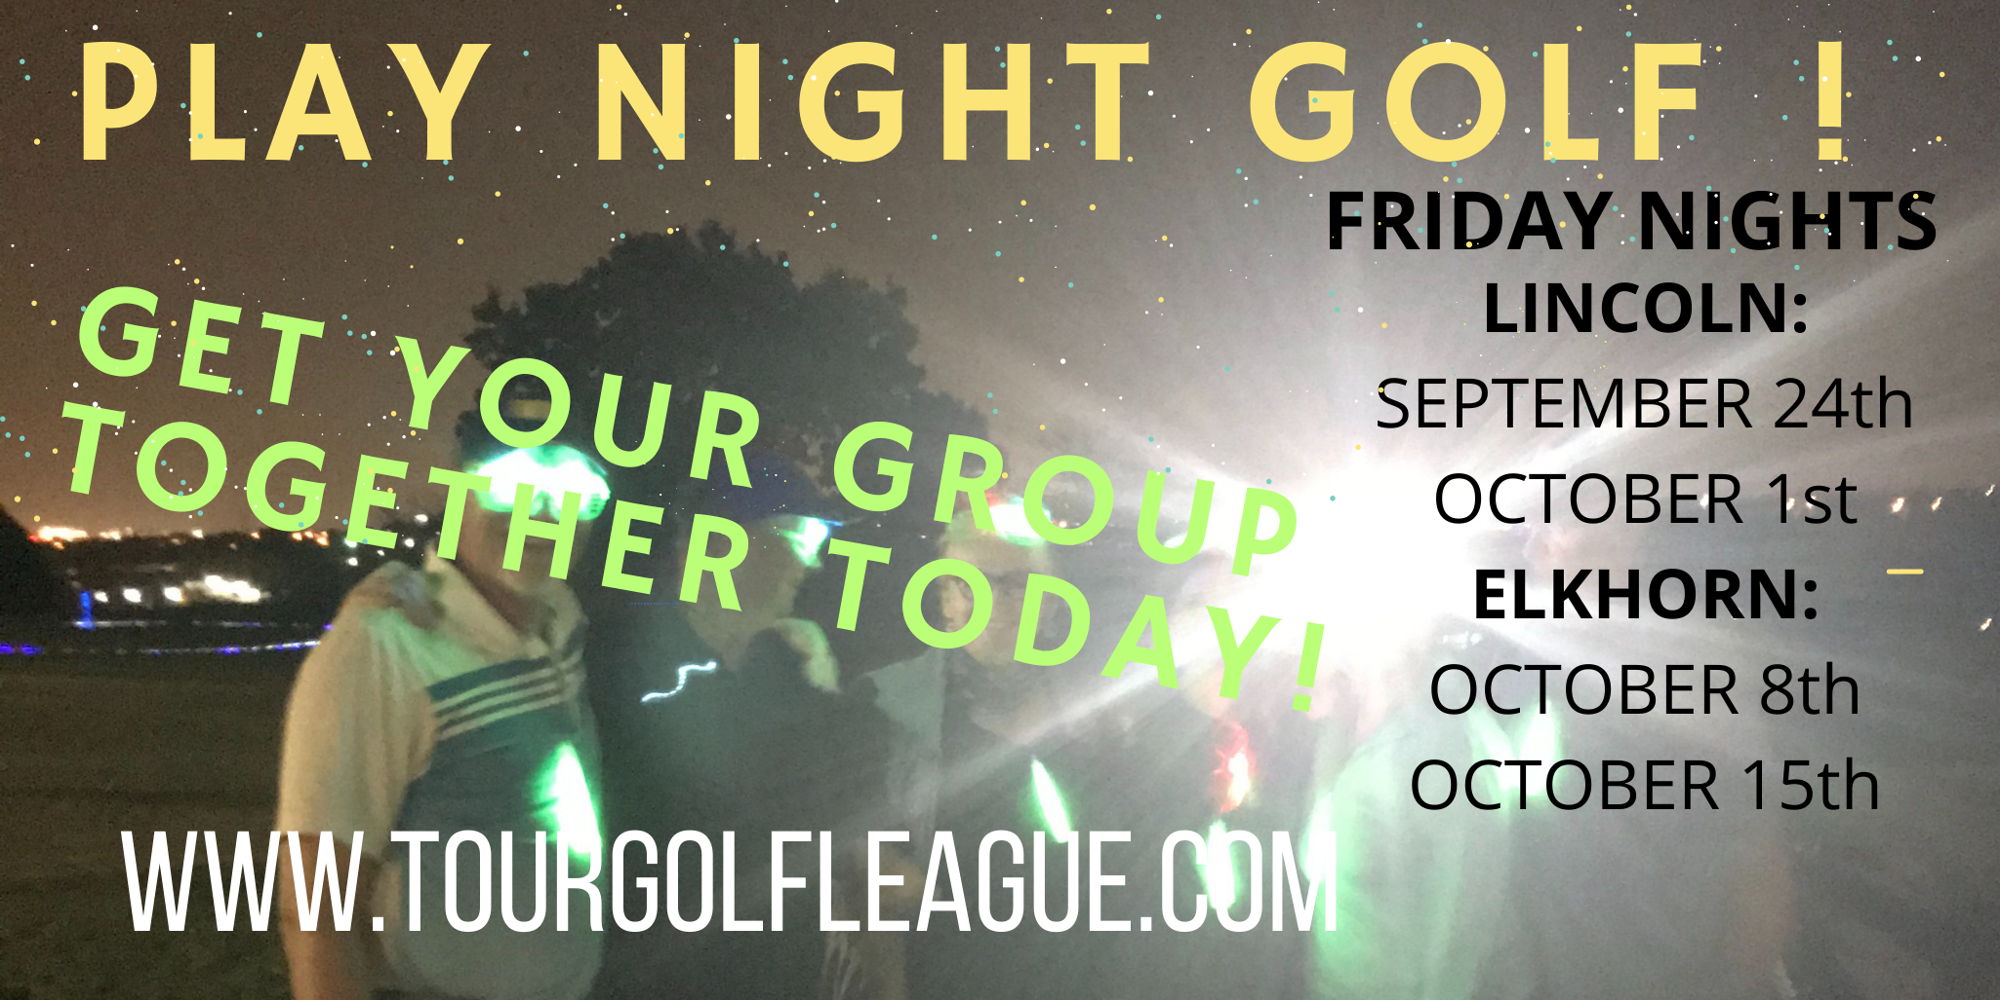 Night Golf Play at Elkhorn Ridge promotional image